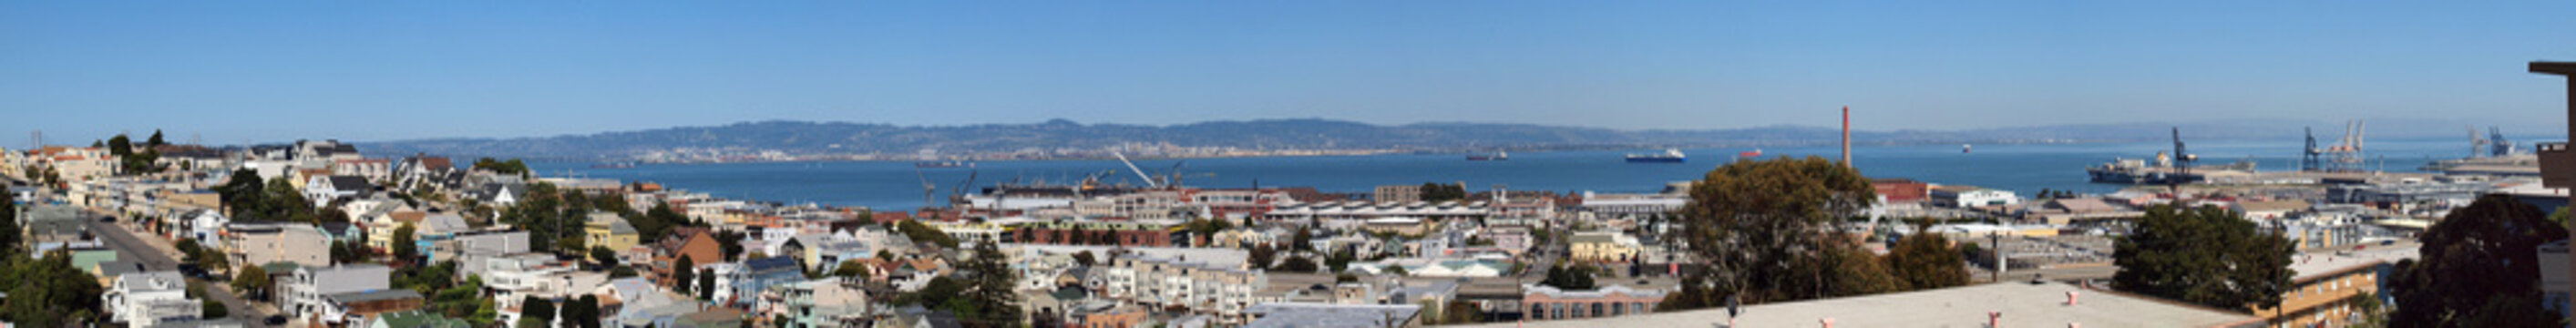 San Francisco Bay seen from Potrero Hill